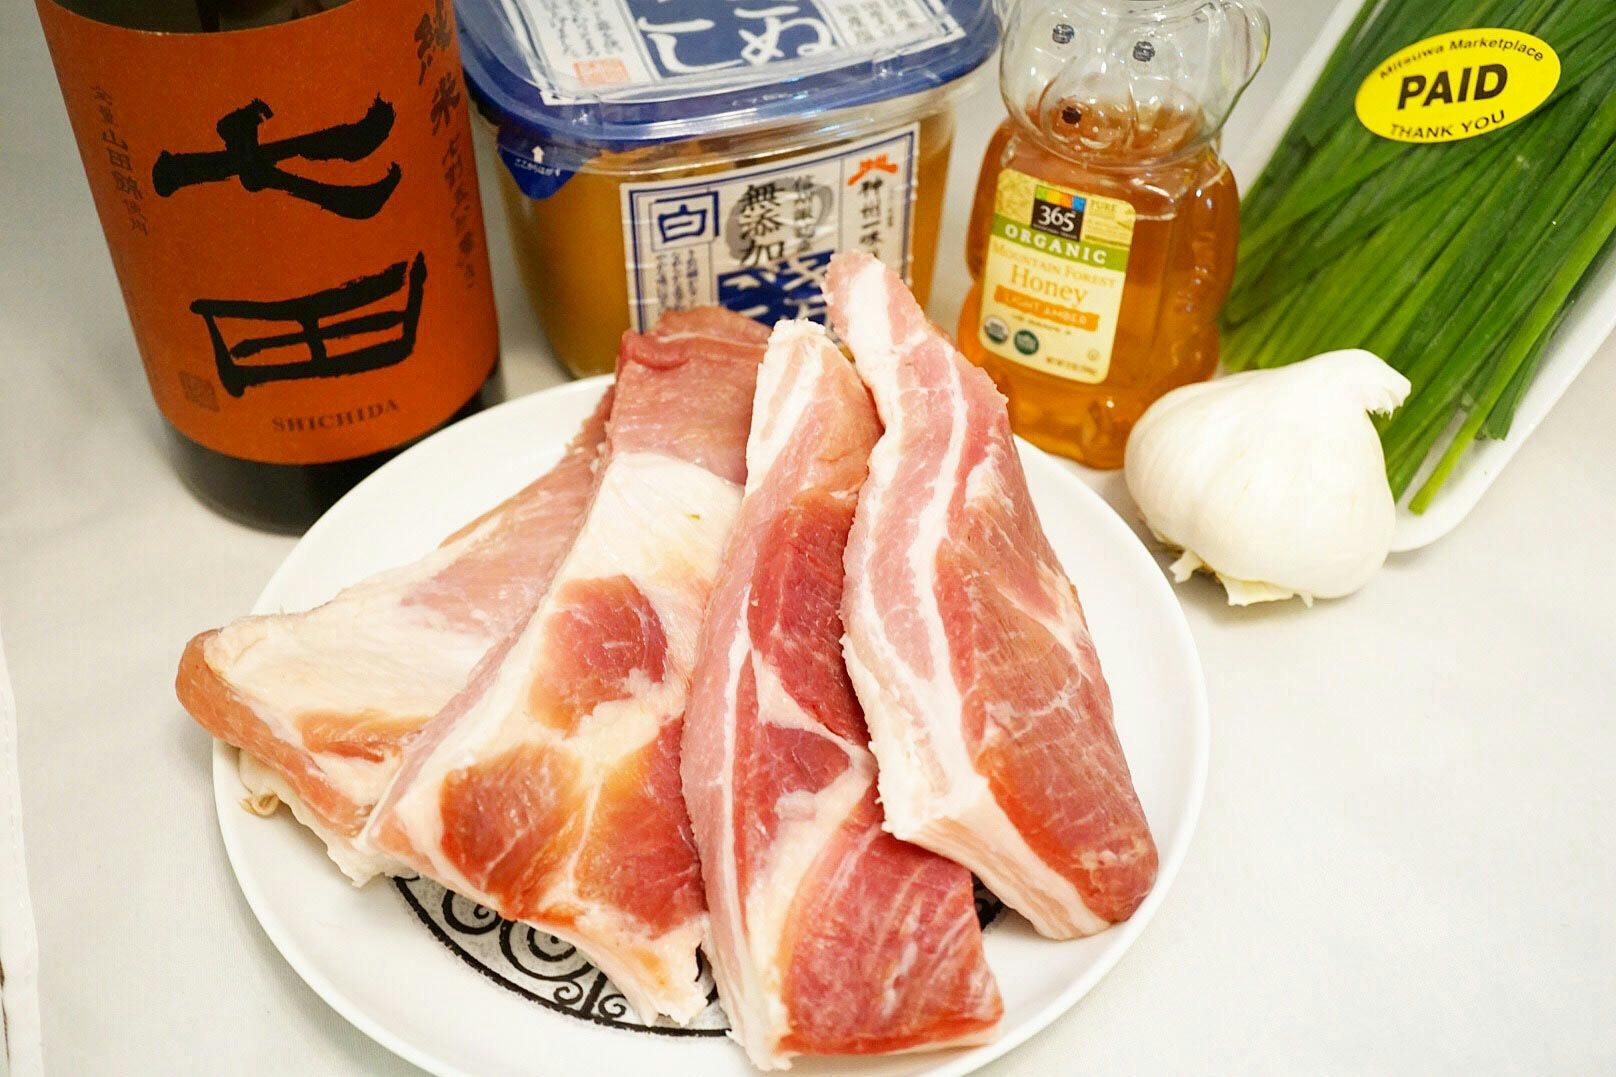 Miso marinated pork recipe ingredients